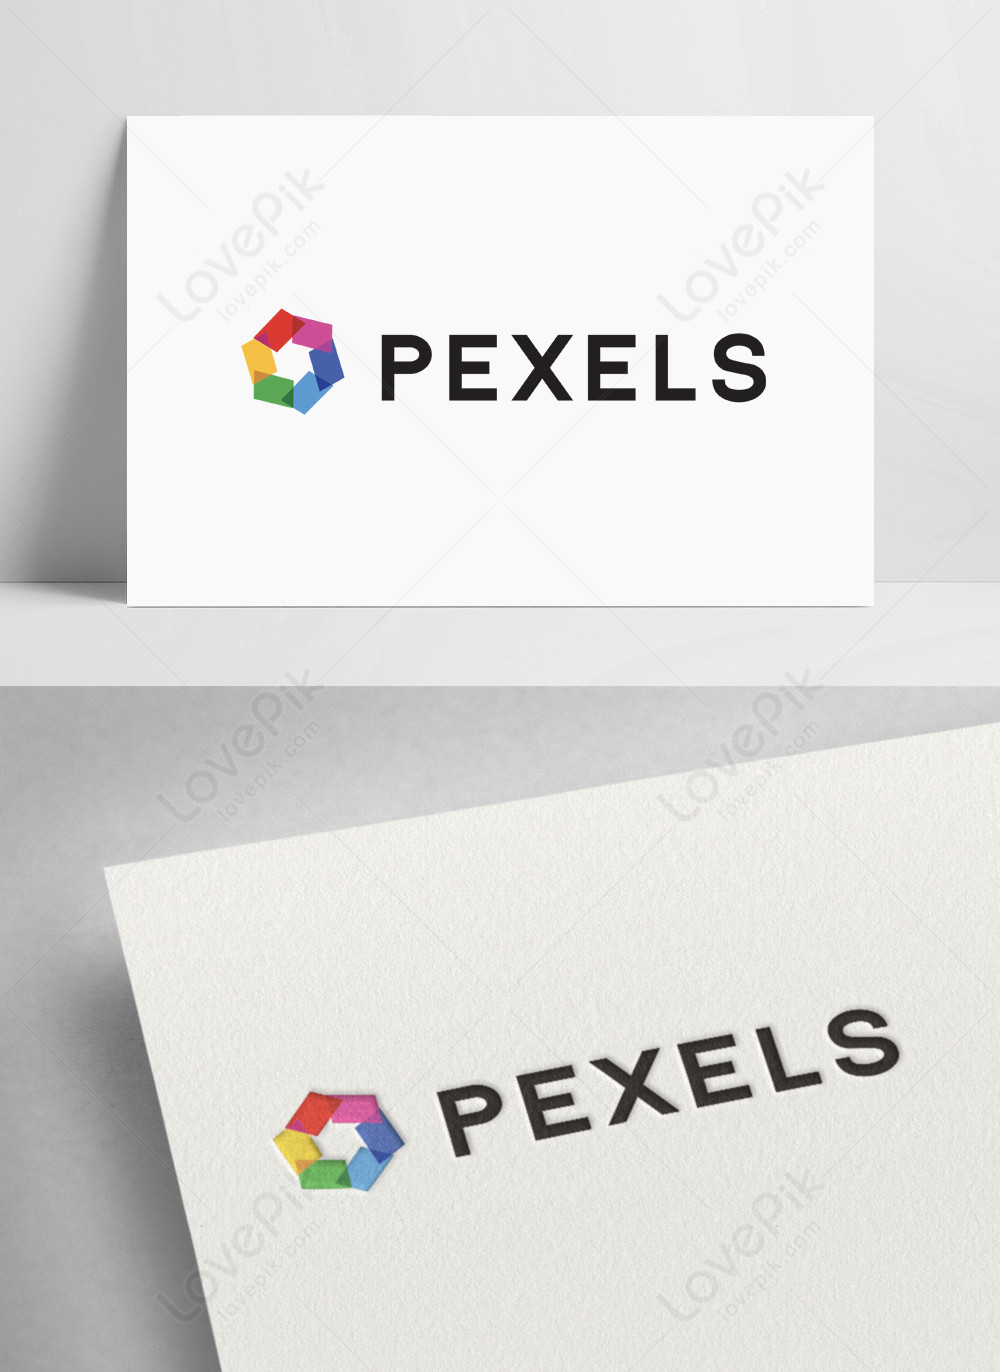 Pexels โลโก้ที่ทันสมัย ดาวน์โหลดรูปภาพ (รหัส) 450063308_ขนาด 1.9 MB_รูป ...